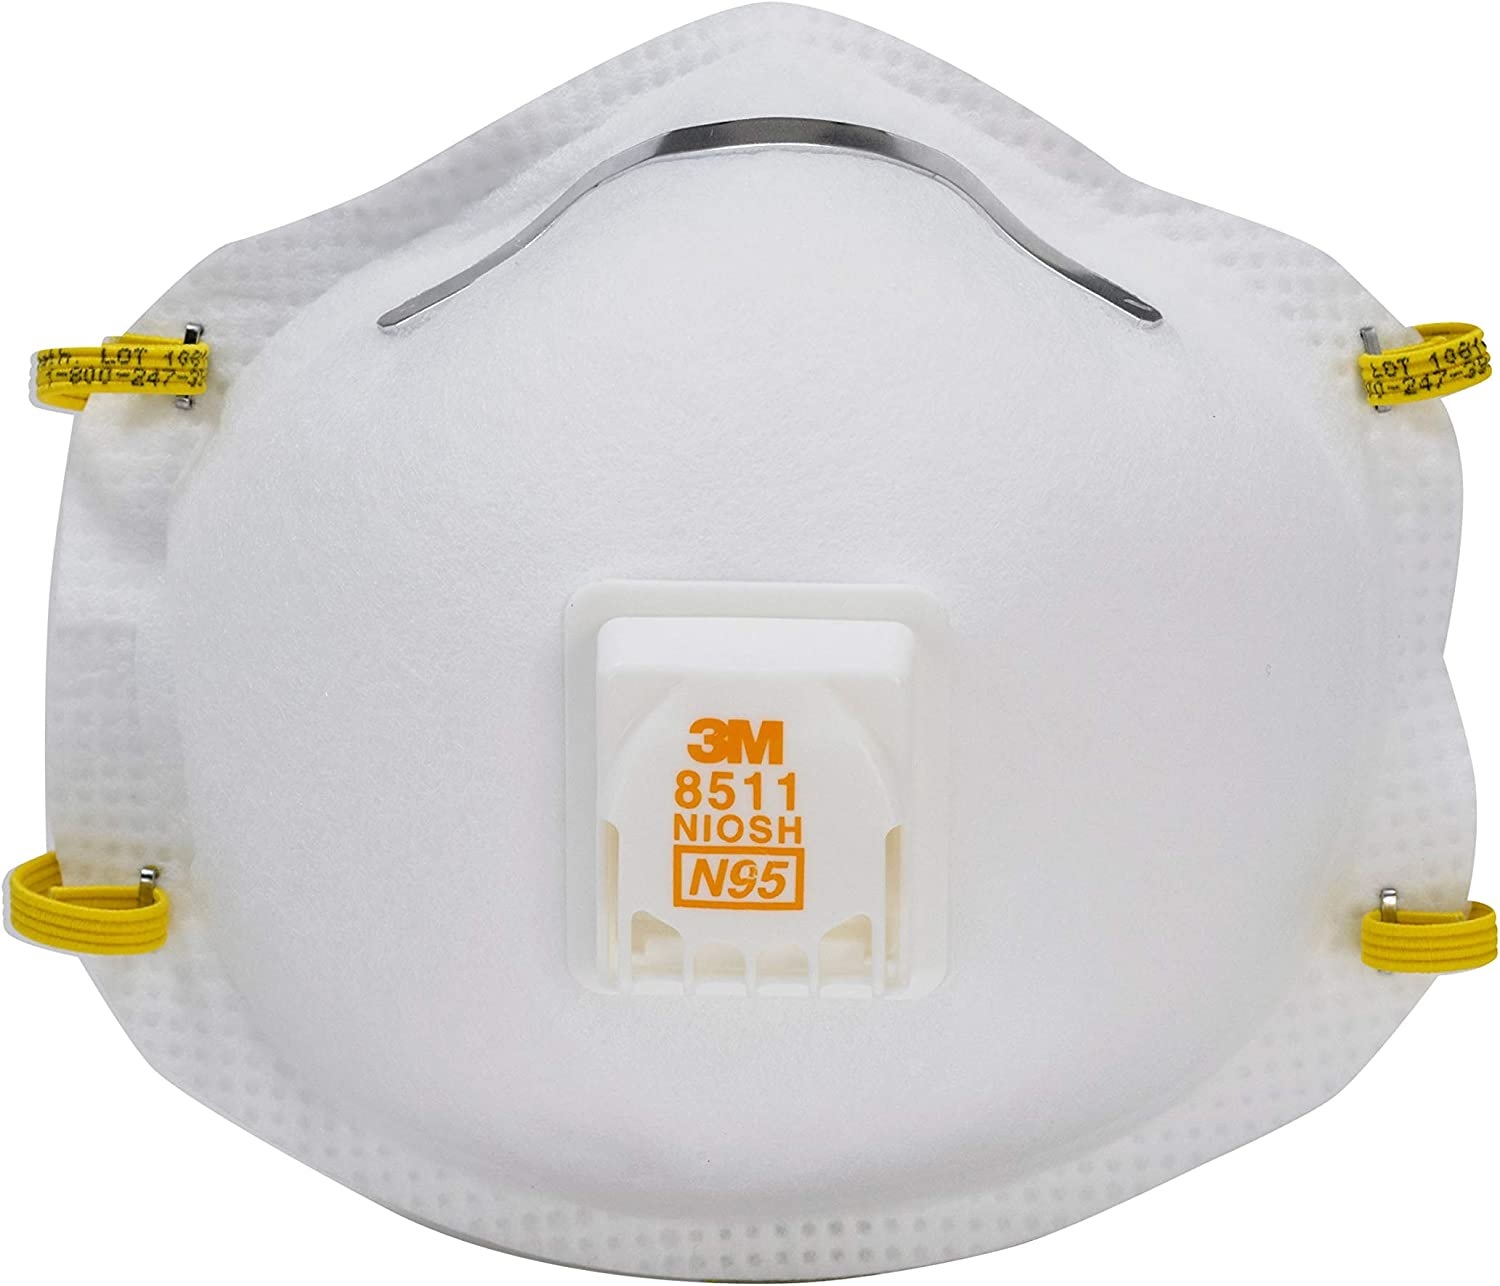 RESPIRATOR WELDING N95 W/EXHALATION VALVE 10/BX - Half Mask Respirators